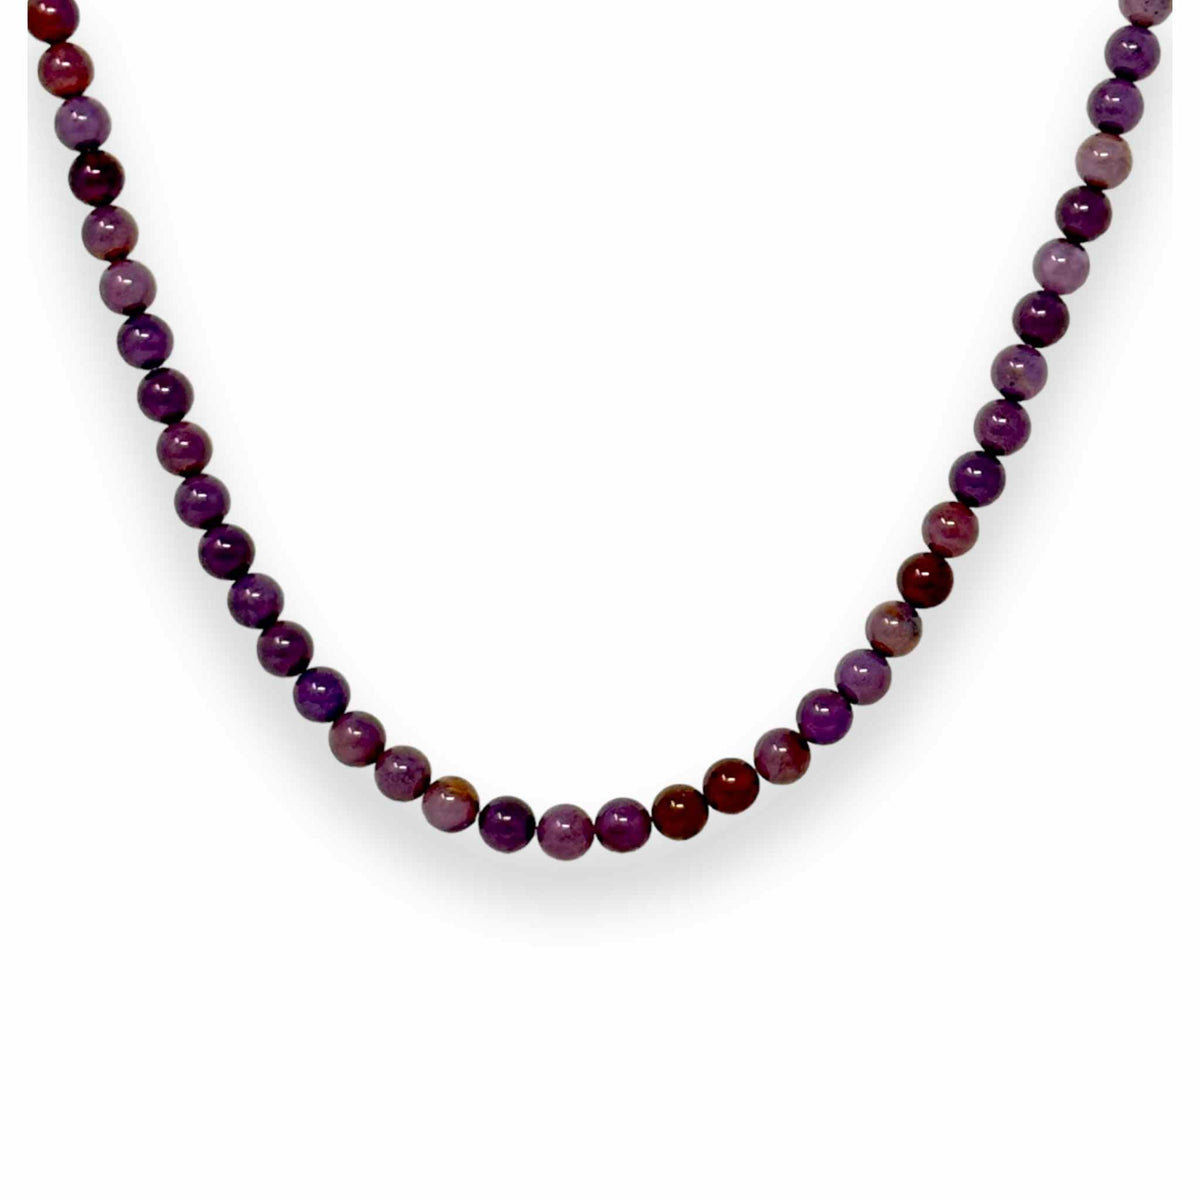 Fairtrade chalcedony gemstone necklace in light purple